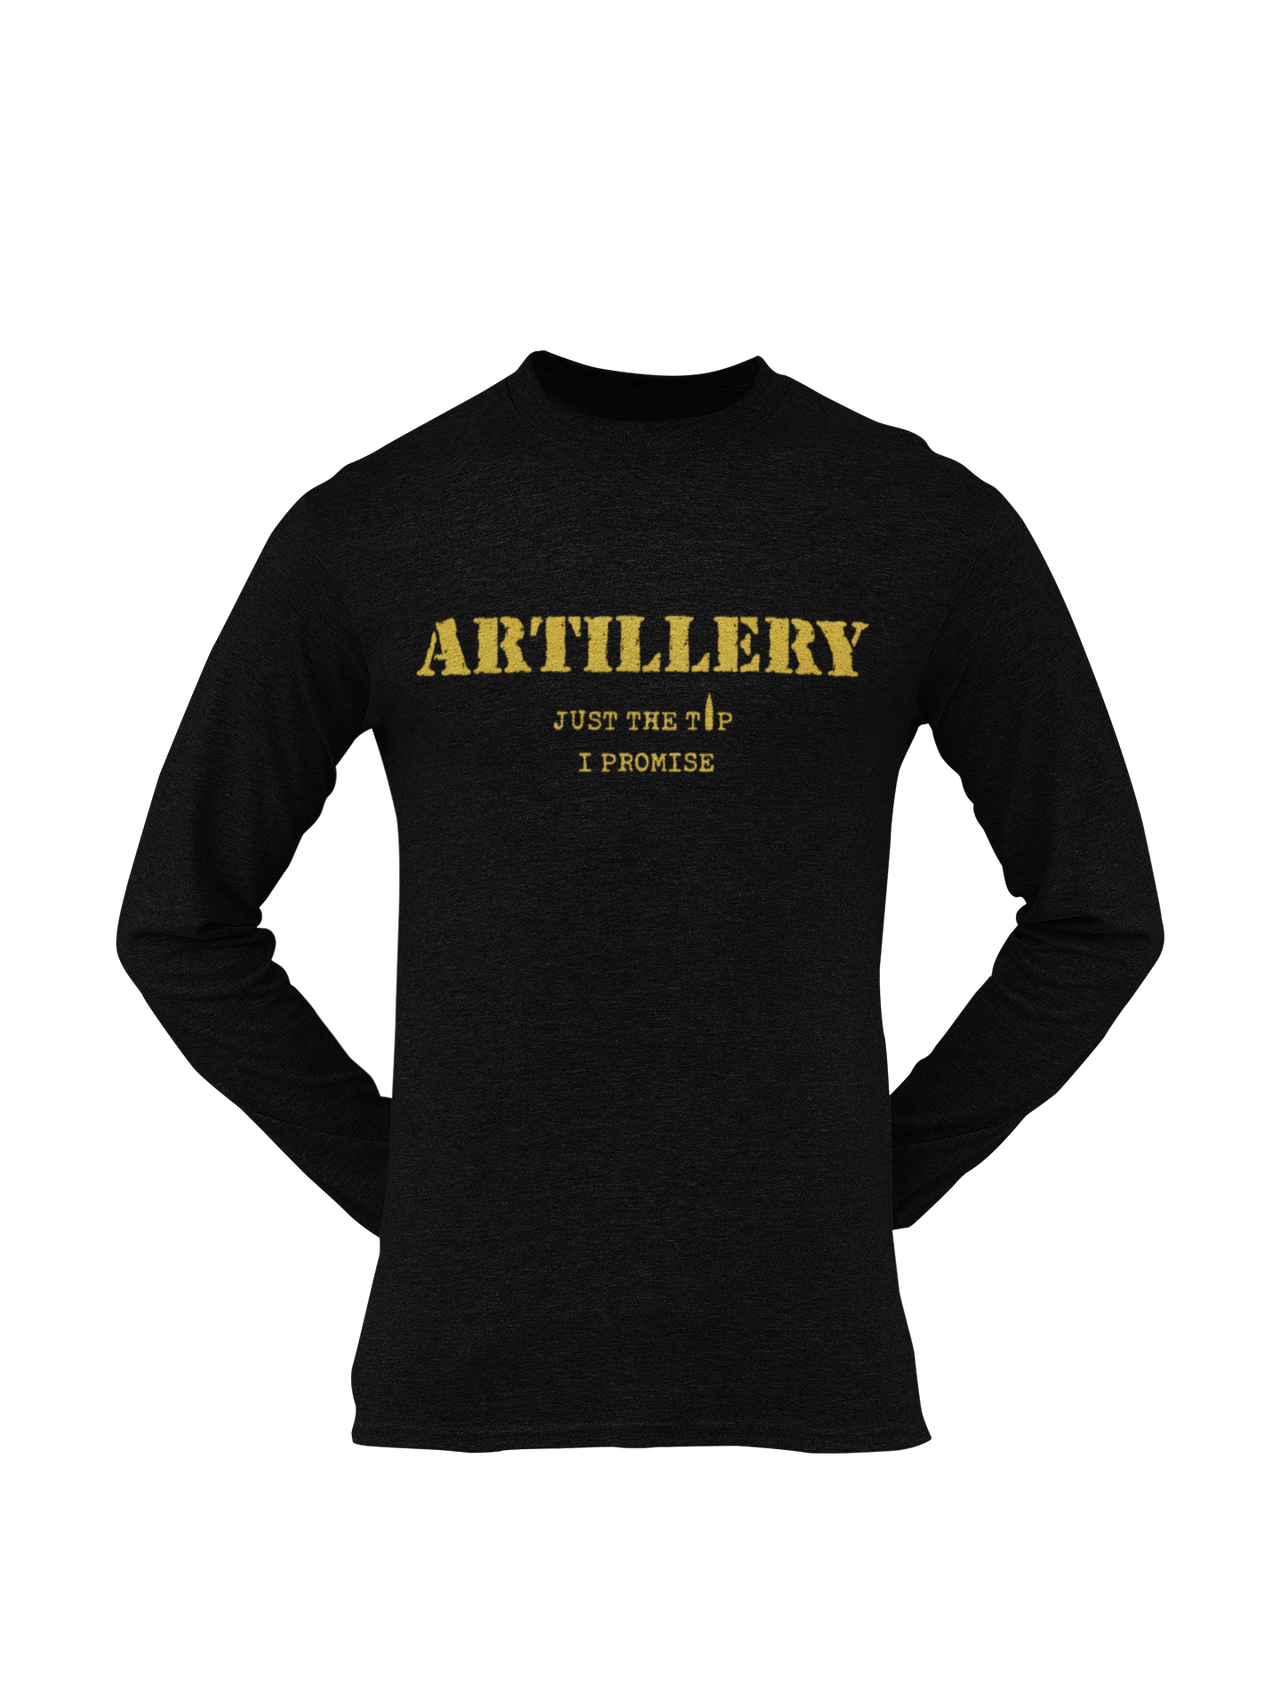 Artillery T-shirt – Just the Tip, I Promise (Men)